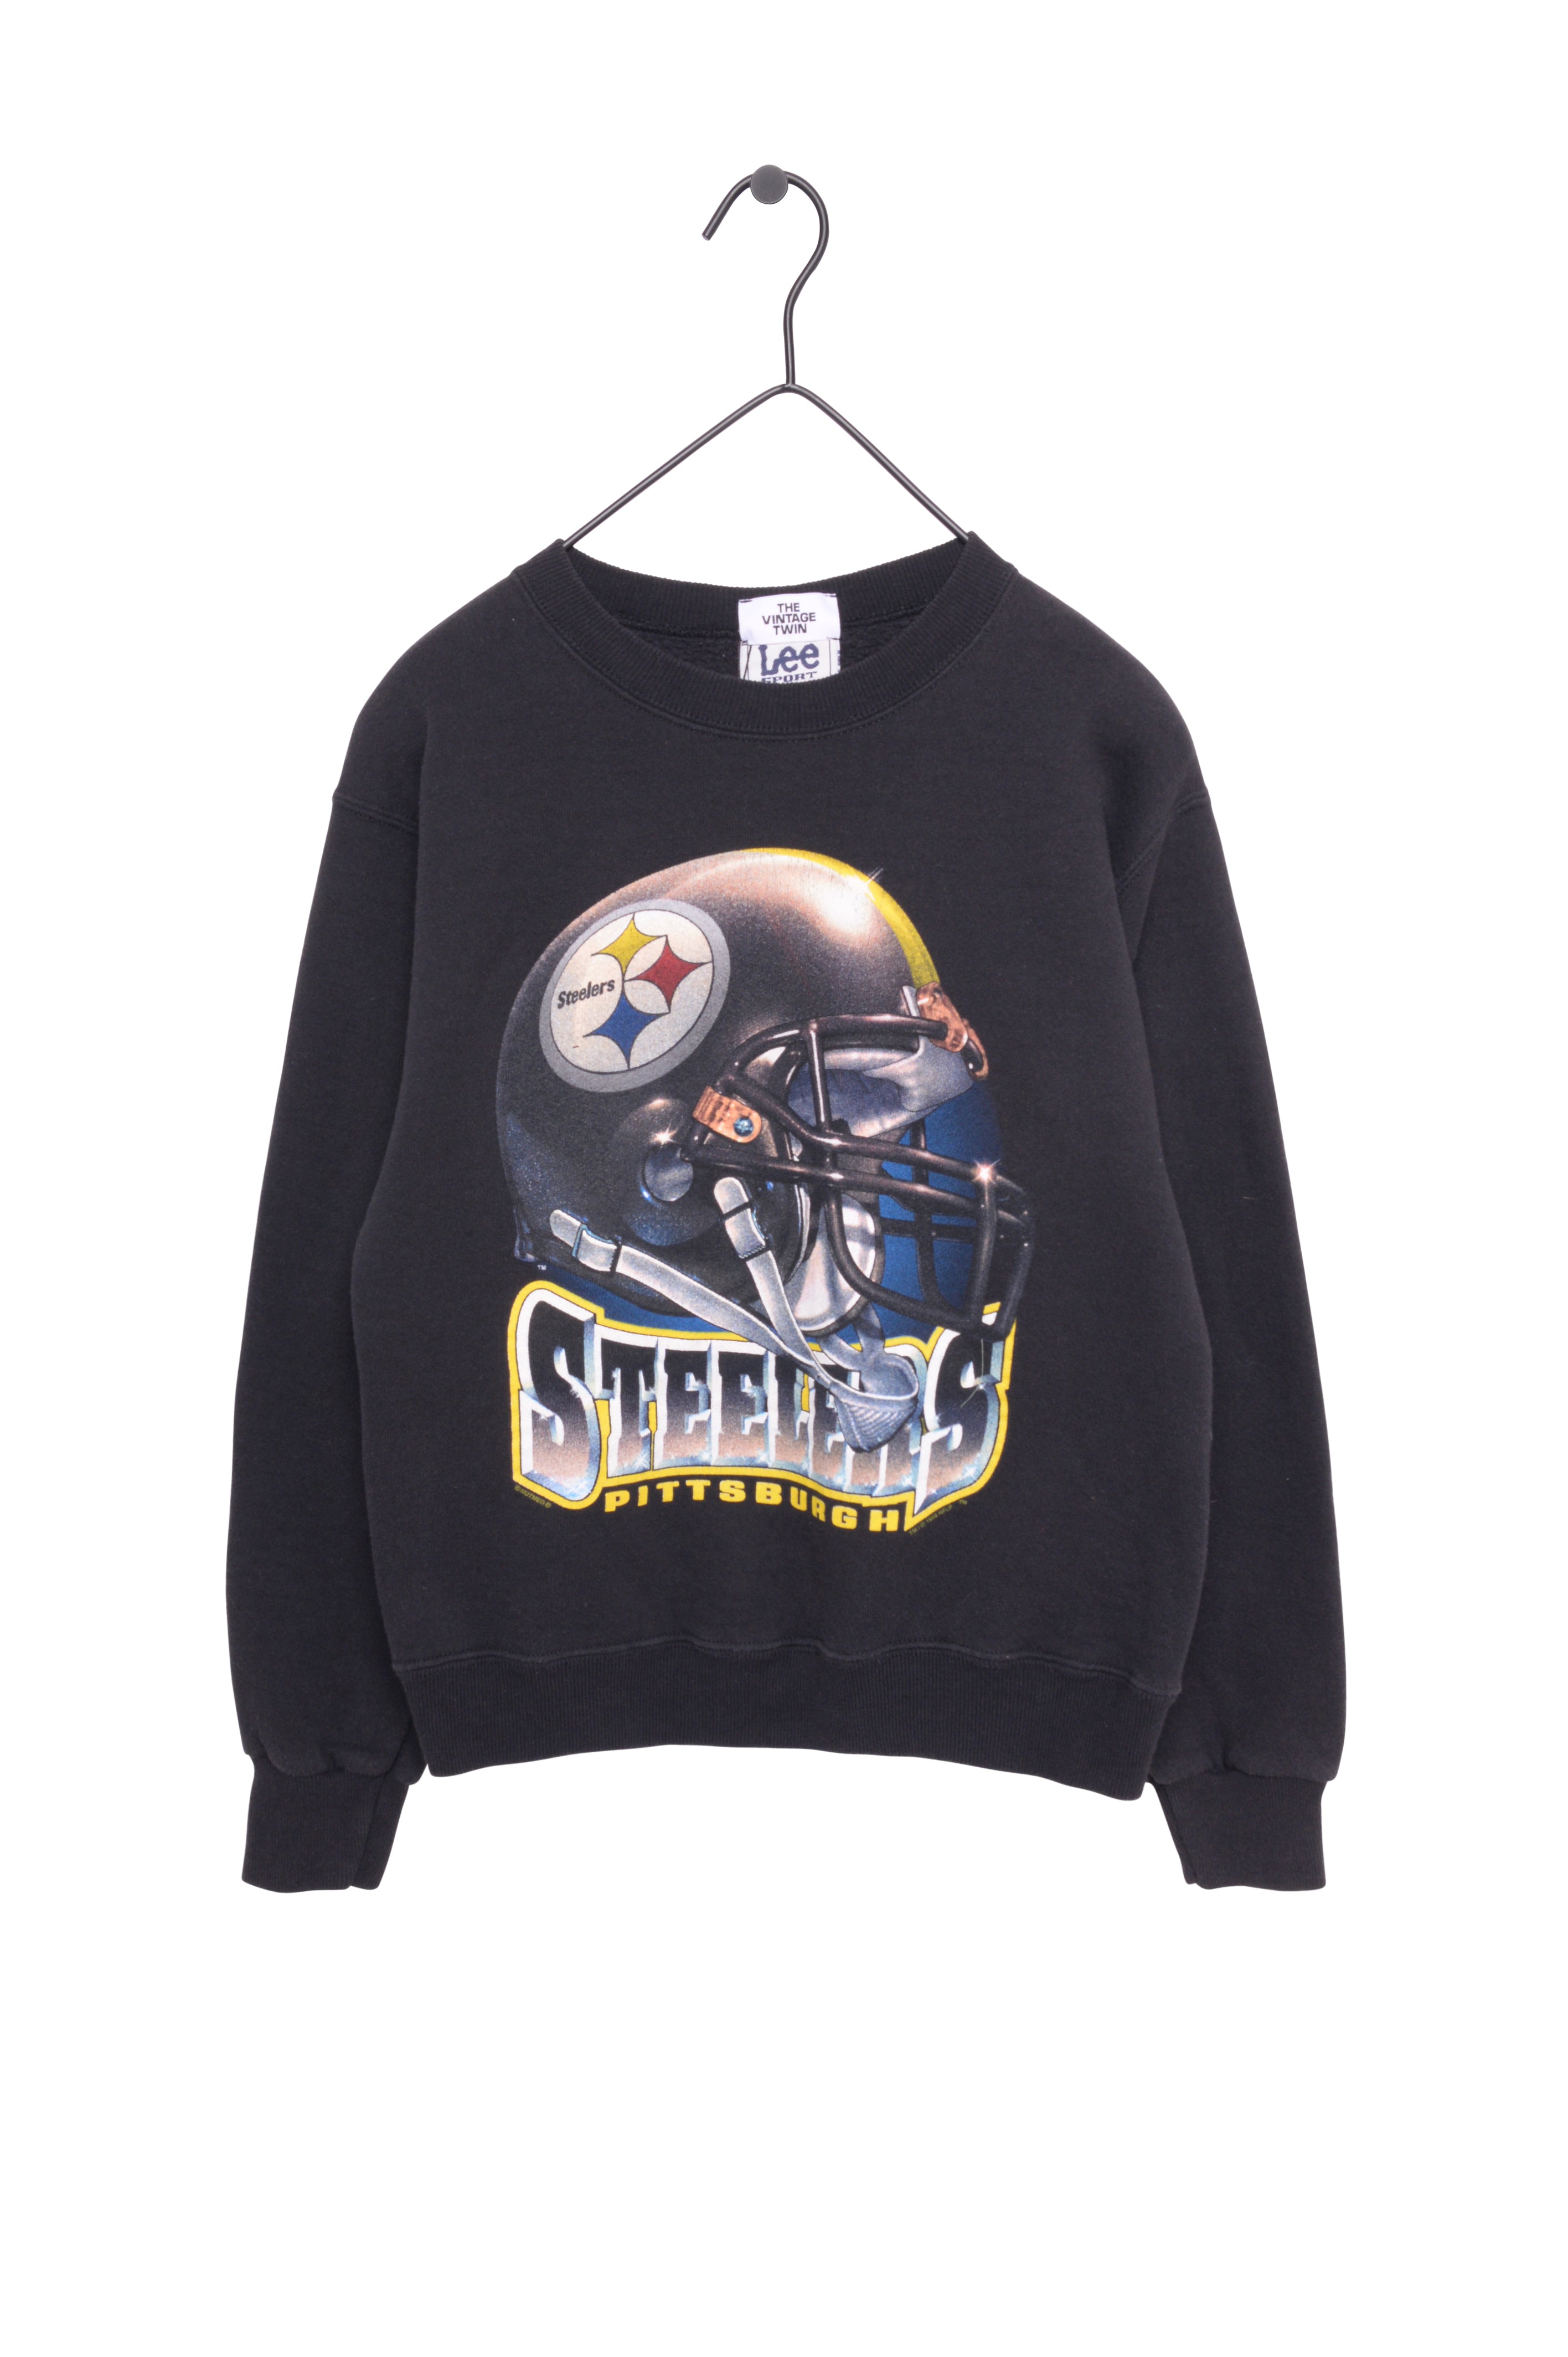 1995 Pittsburgh Steelers Sweatshirt Free Shipping - The Vintage Twin